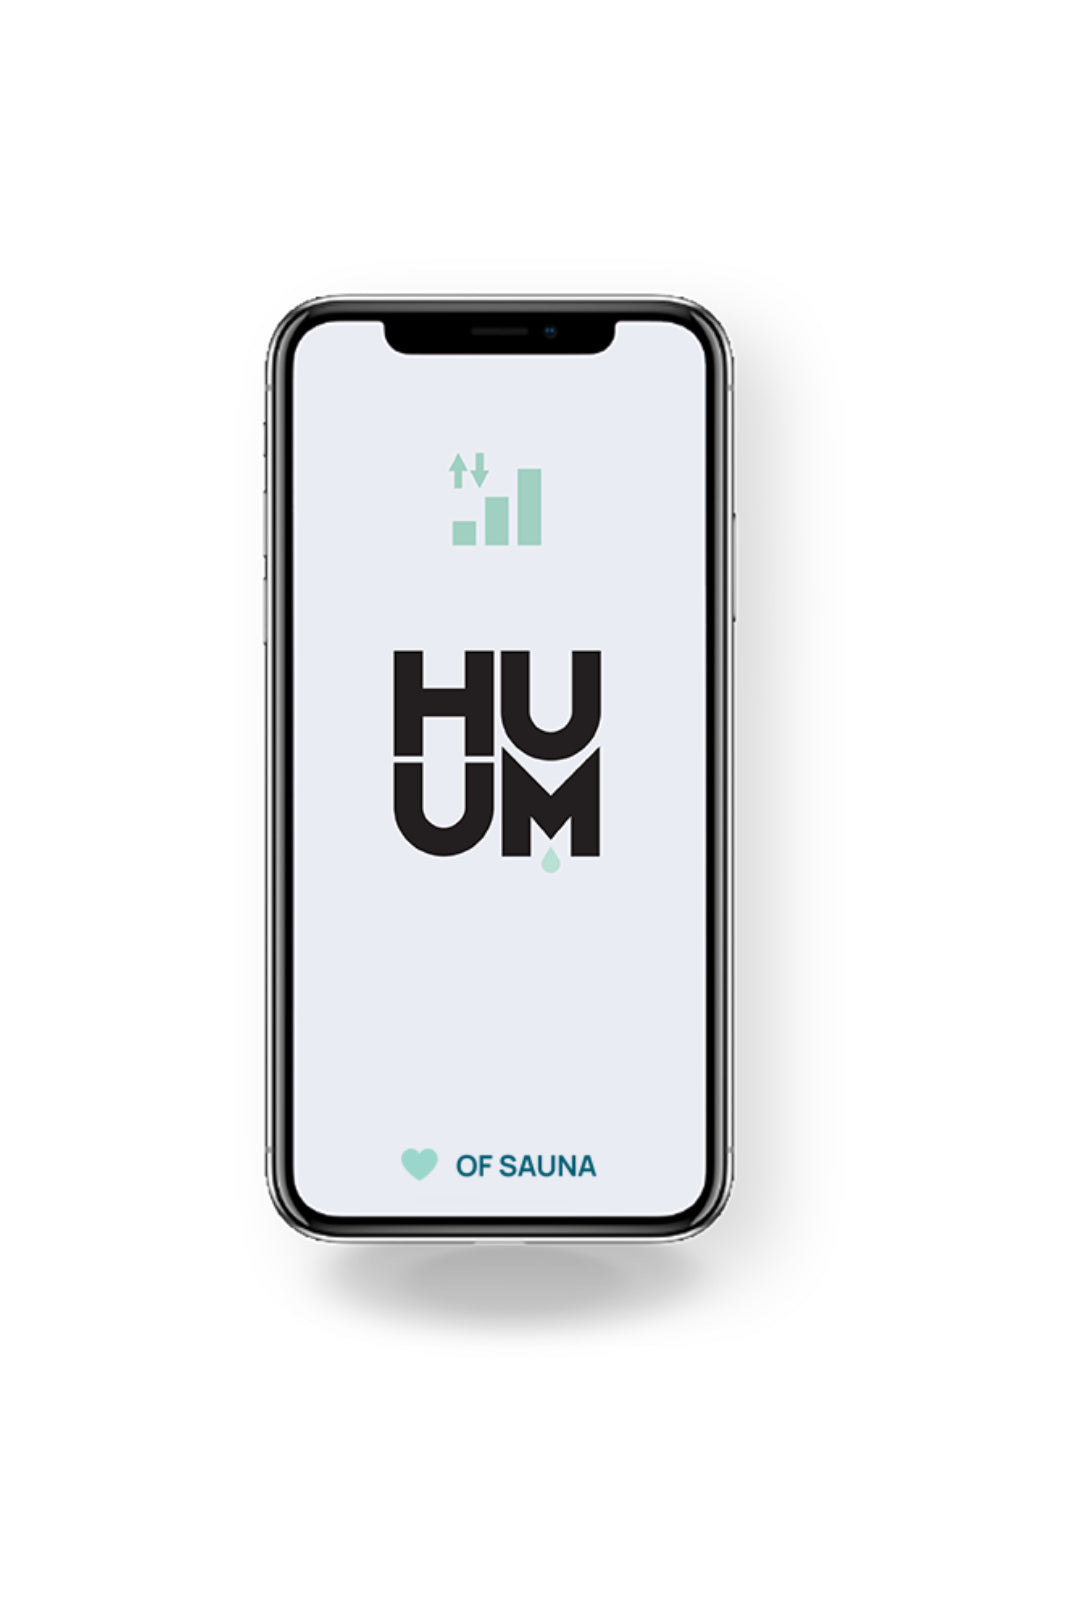 HUUM sauna controller mobile app